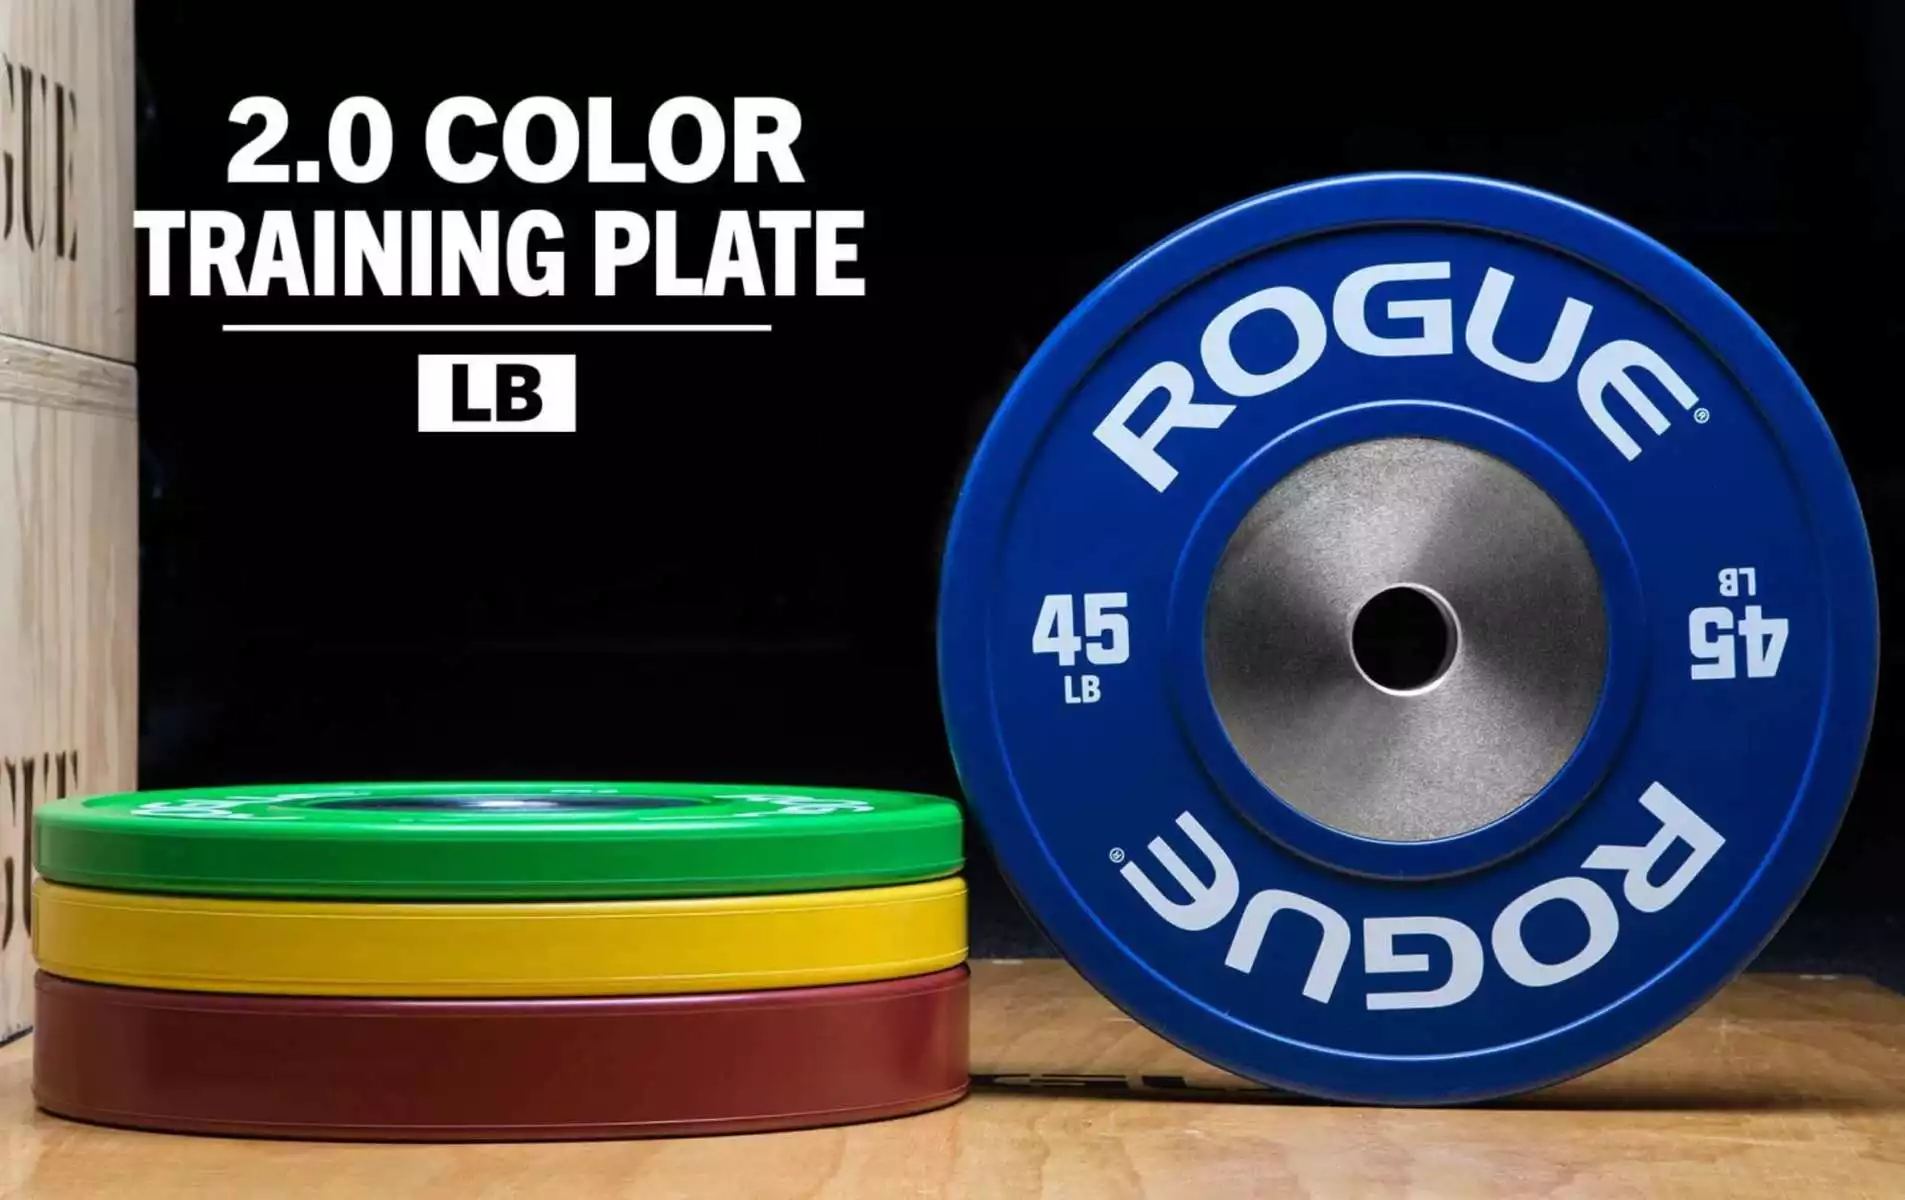 Rogue Color LB Training 2.0 Plates